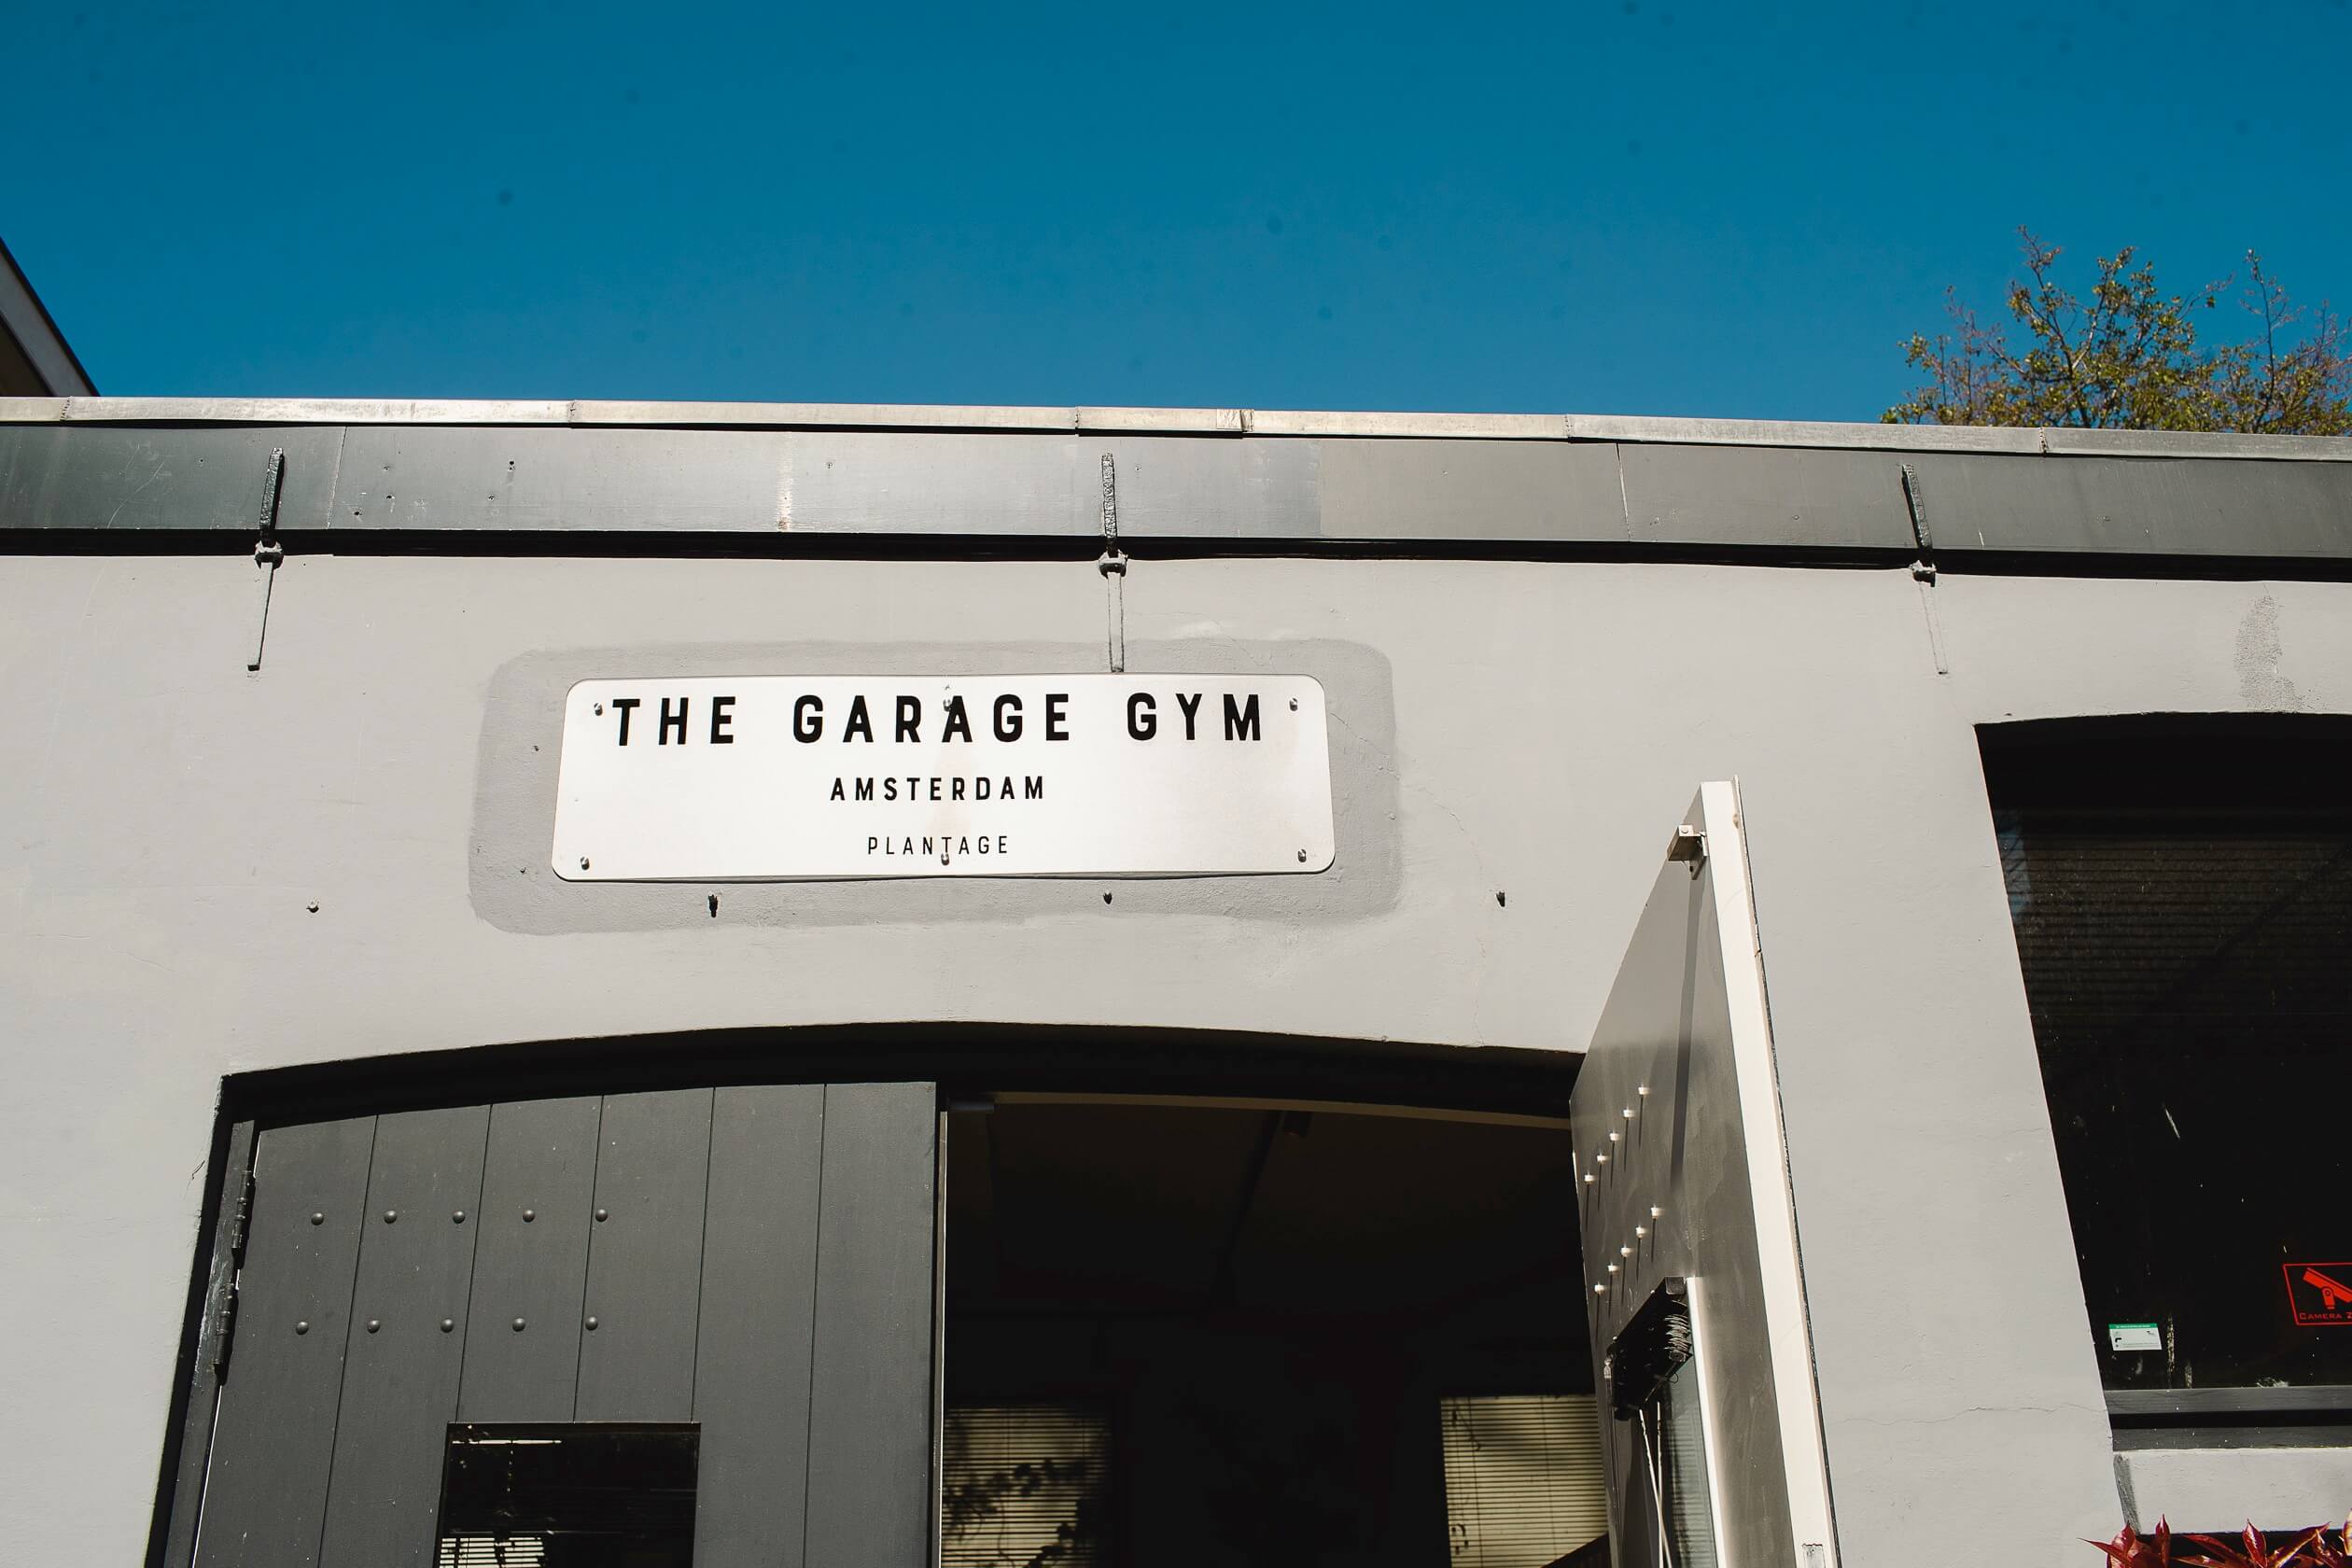 the-garage-gym-location-plantage-sign-front-door